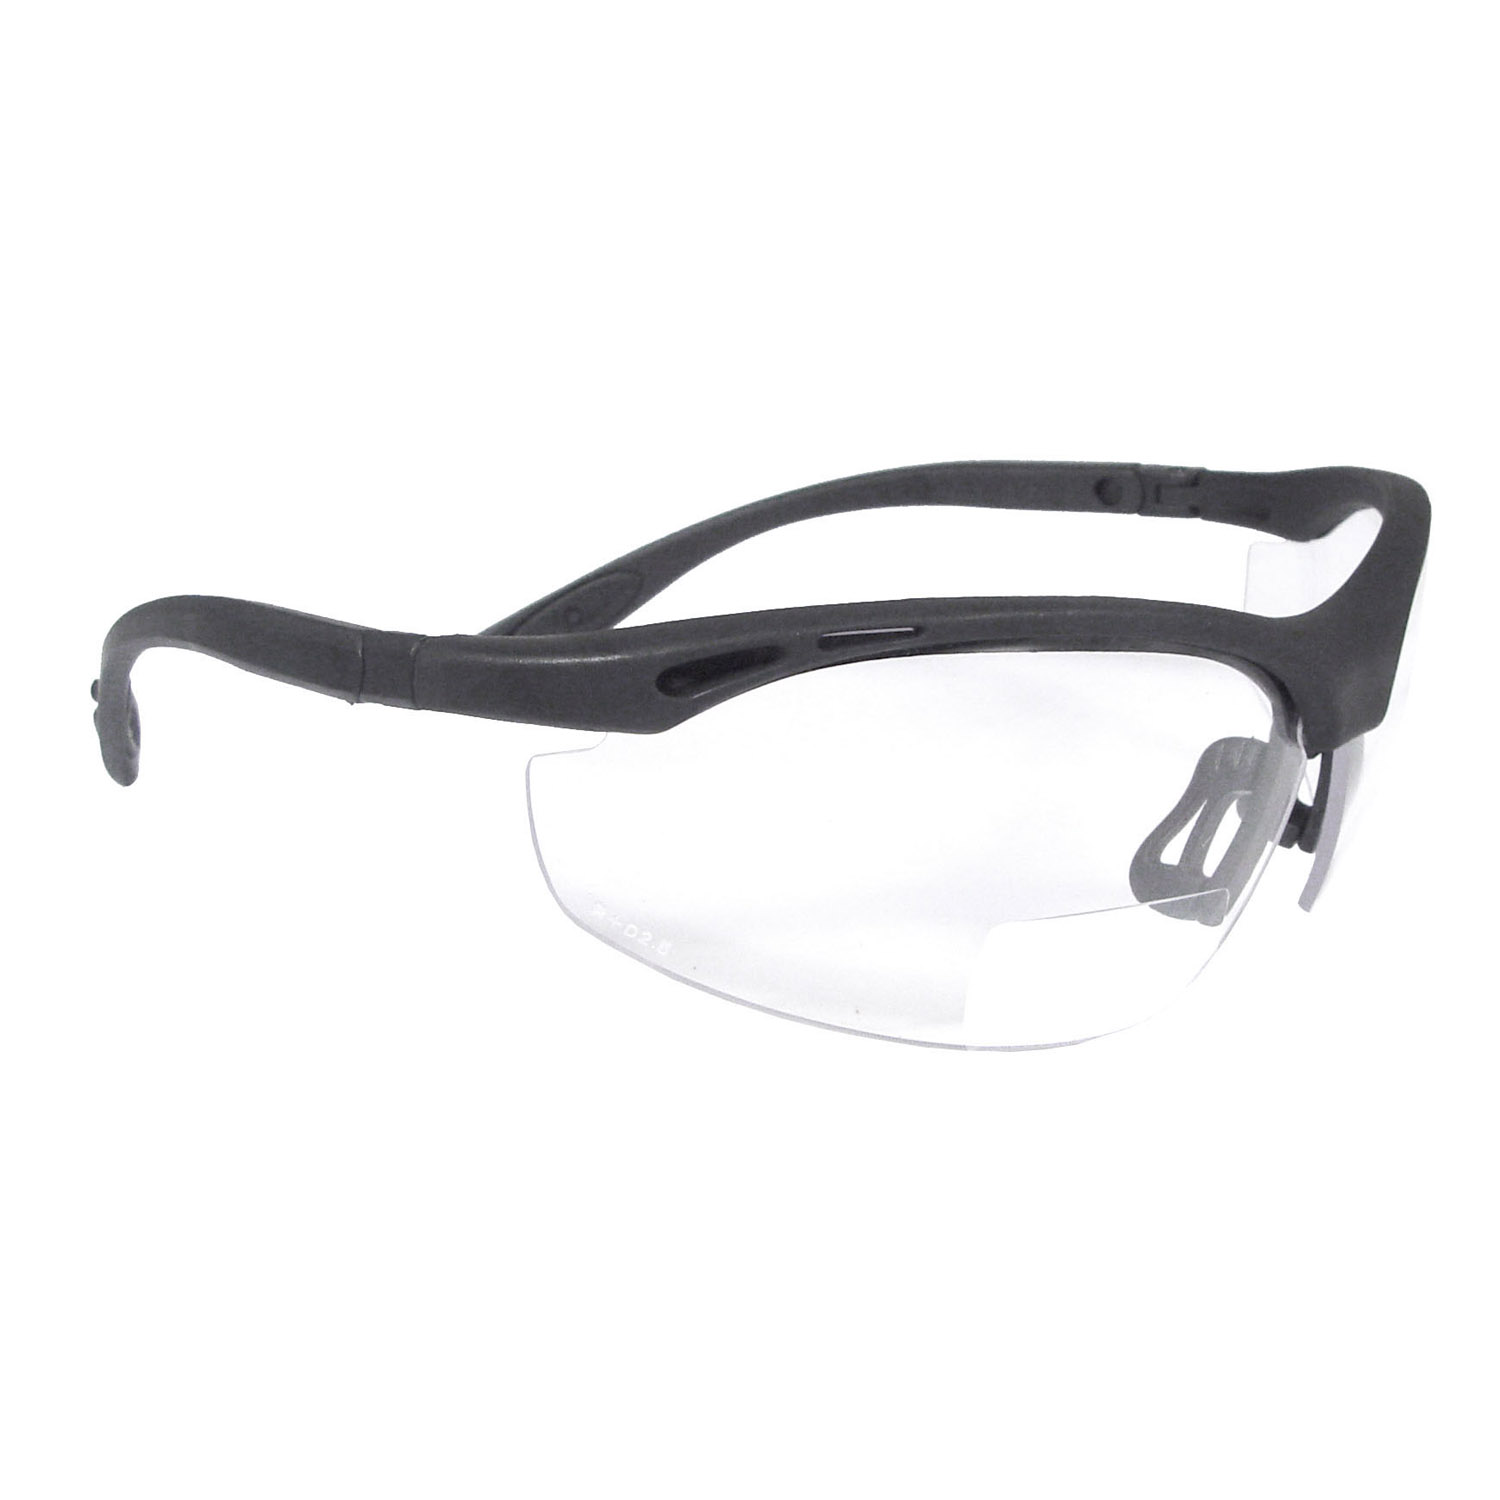 Cheaters® Bi-Focal Eyewear - Black Frame - Clear Lens - 1.0 Diopter - Bifocals